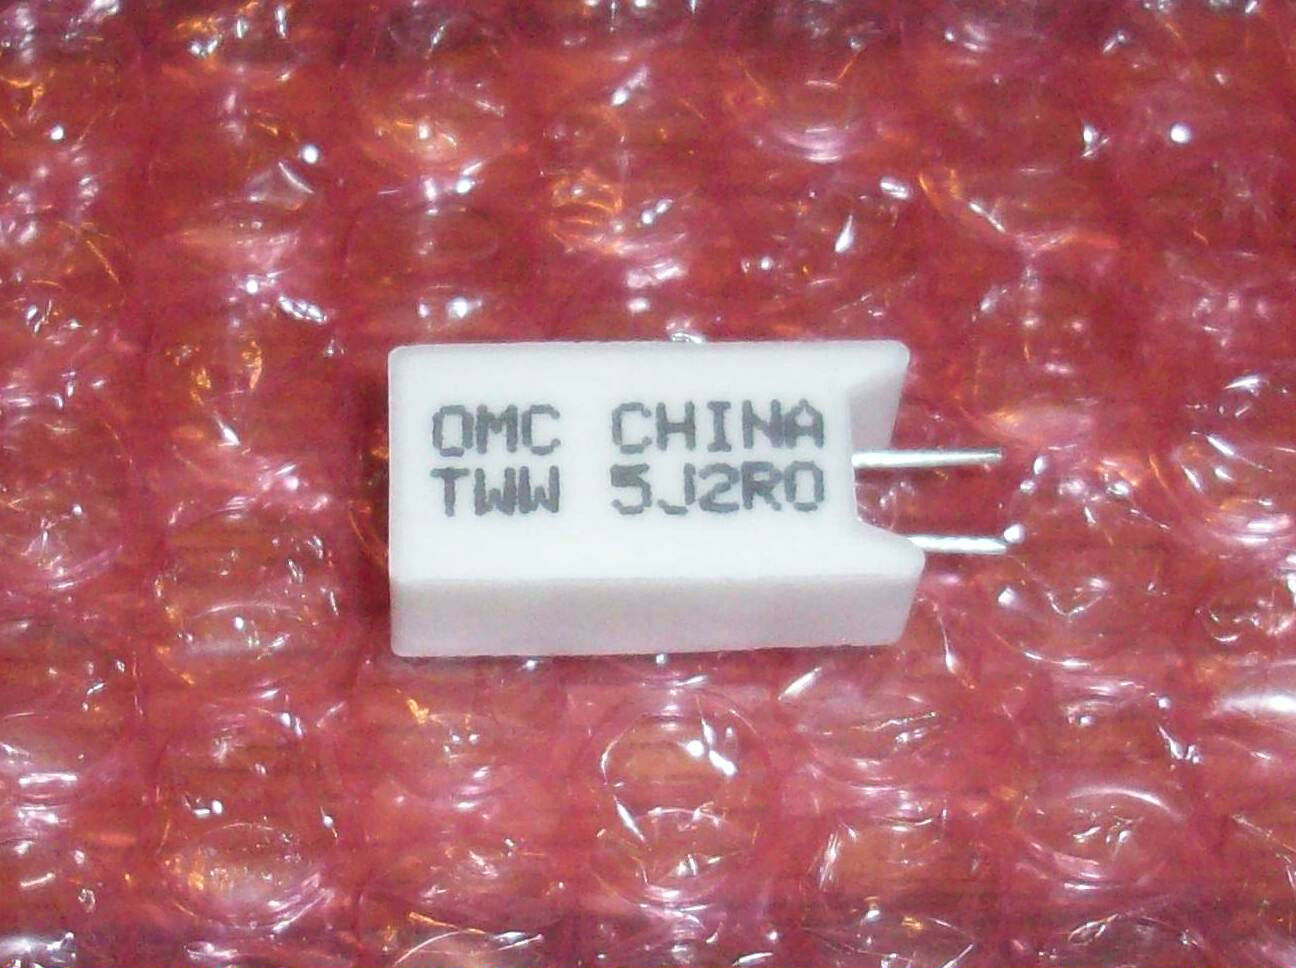 1x 5j2r0 2 Ohm 5 Watt Cement Fusible Resistor - Will Replace Rgdu5m-5e (1.8 Ohm)